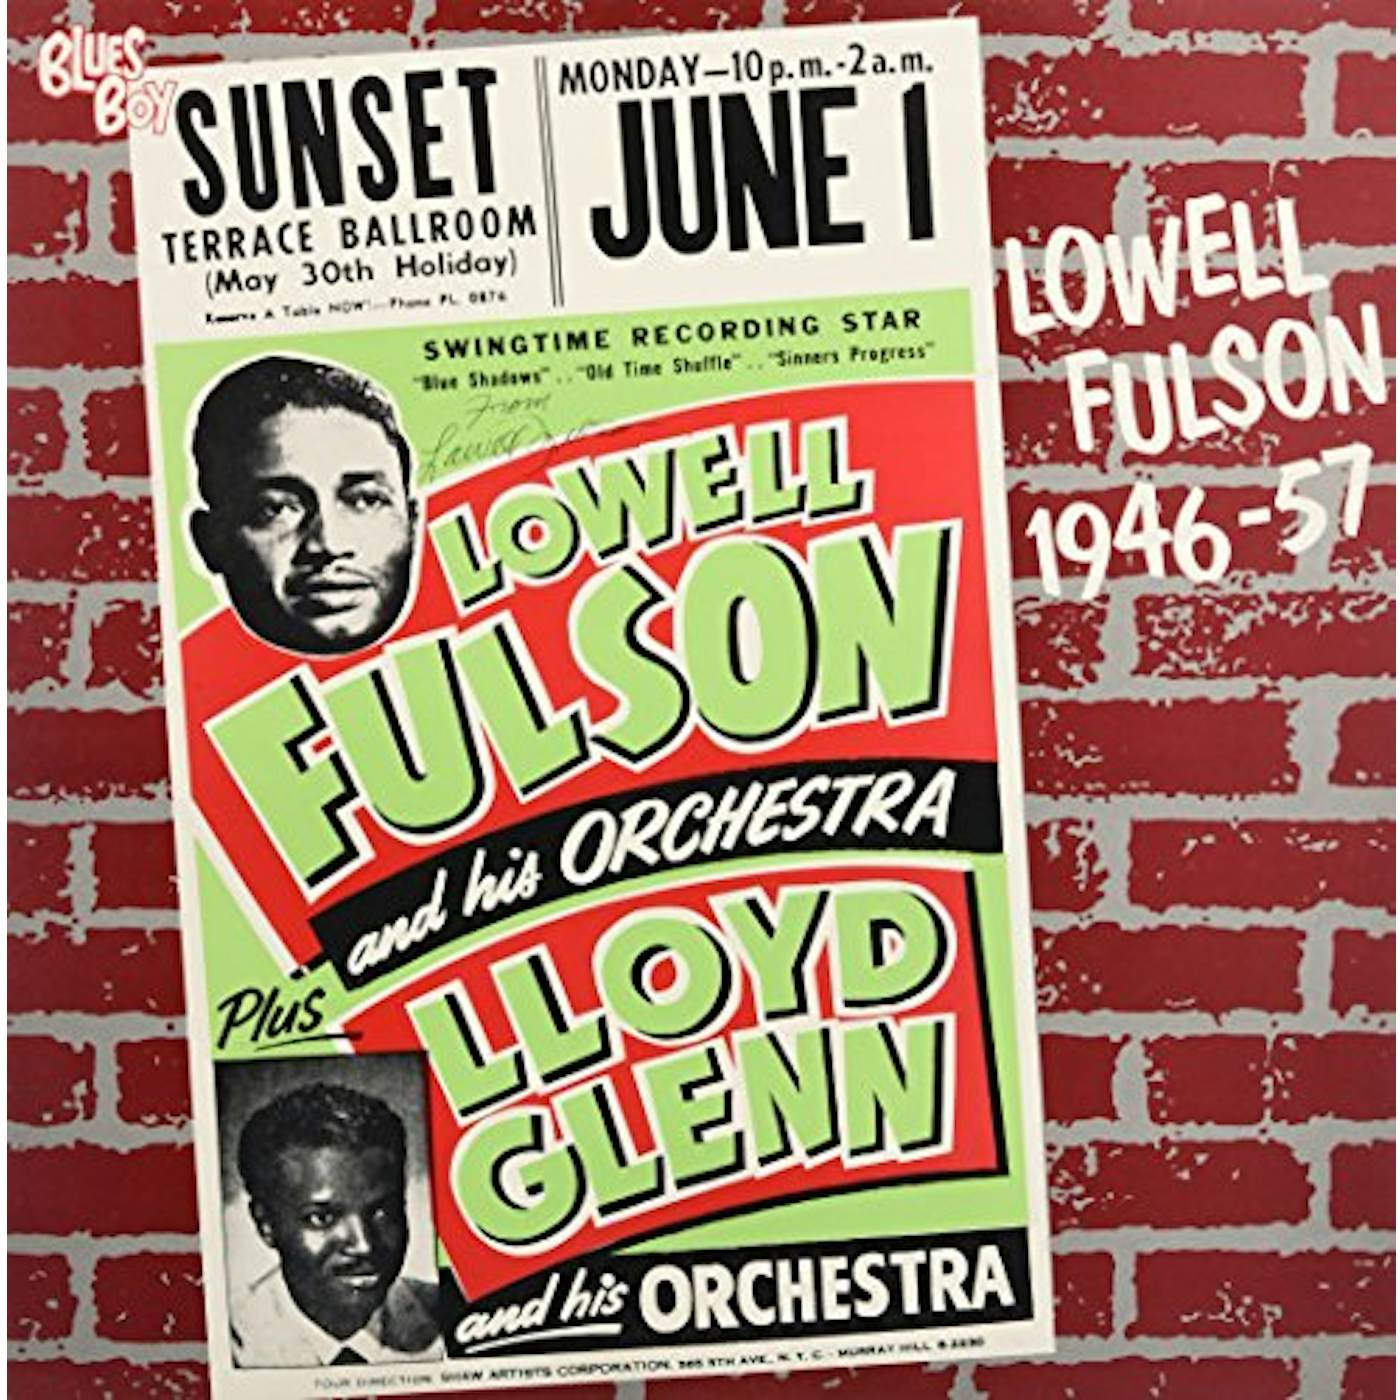 Lowell Fulson BLUES Vinyl Record